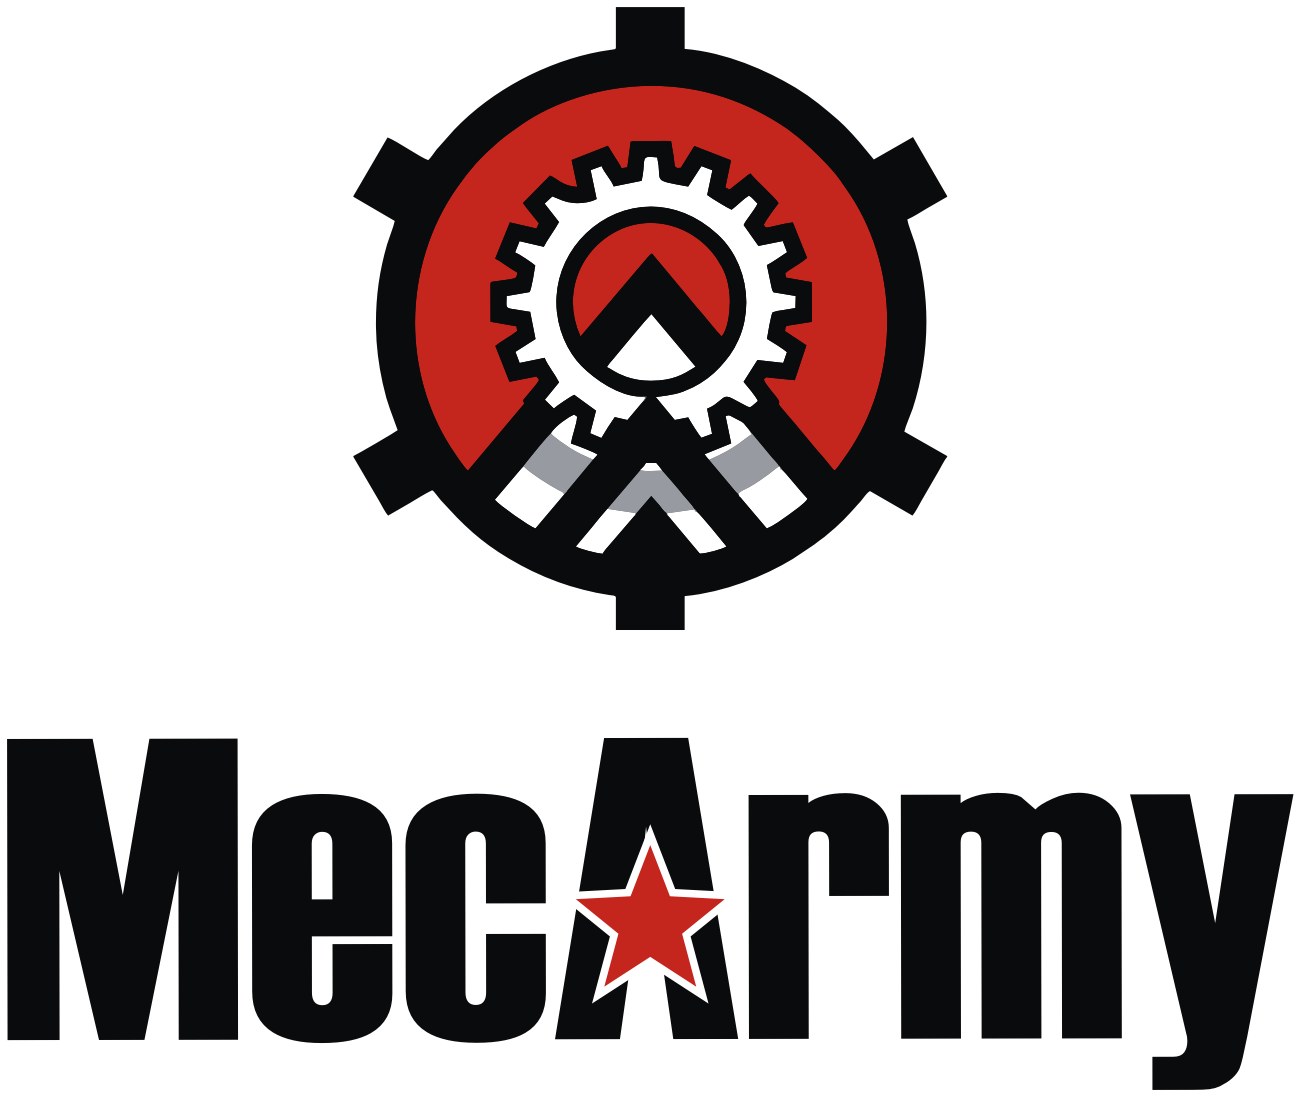 MecArmy